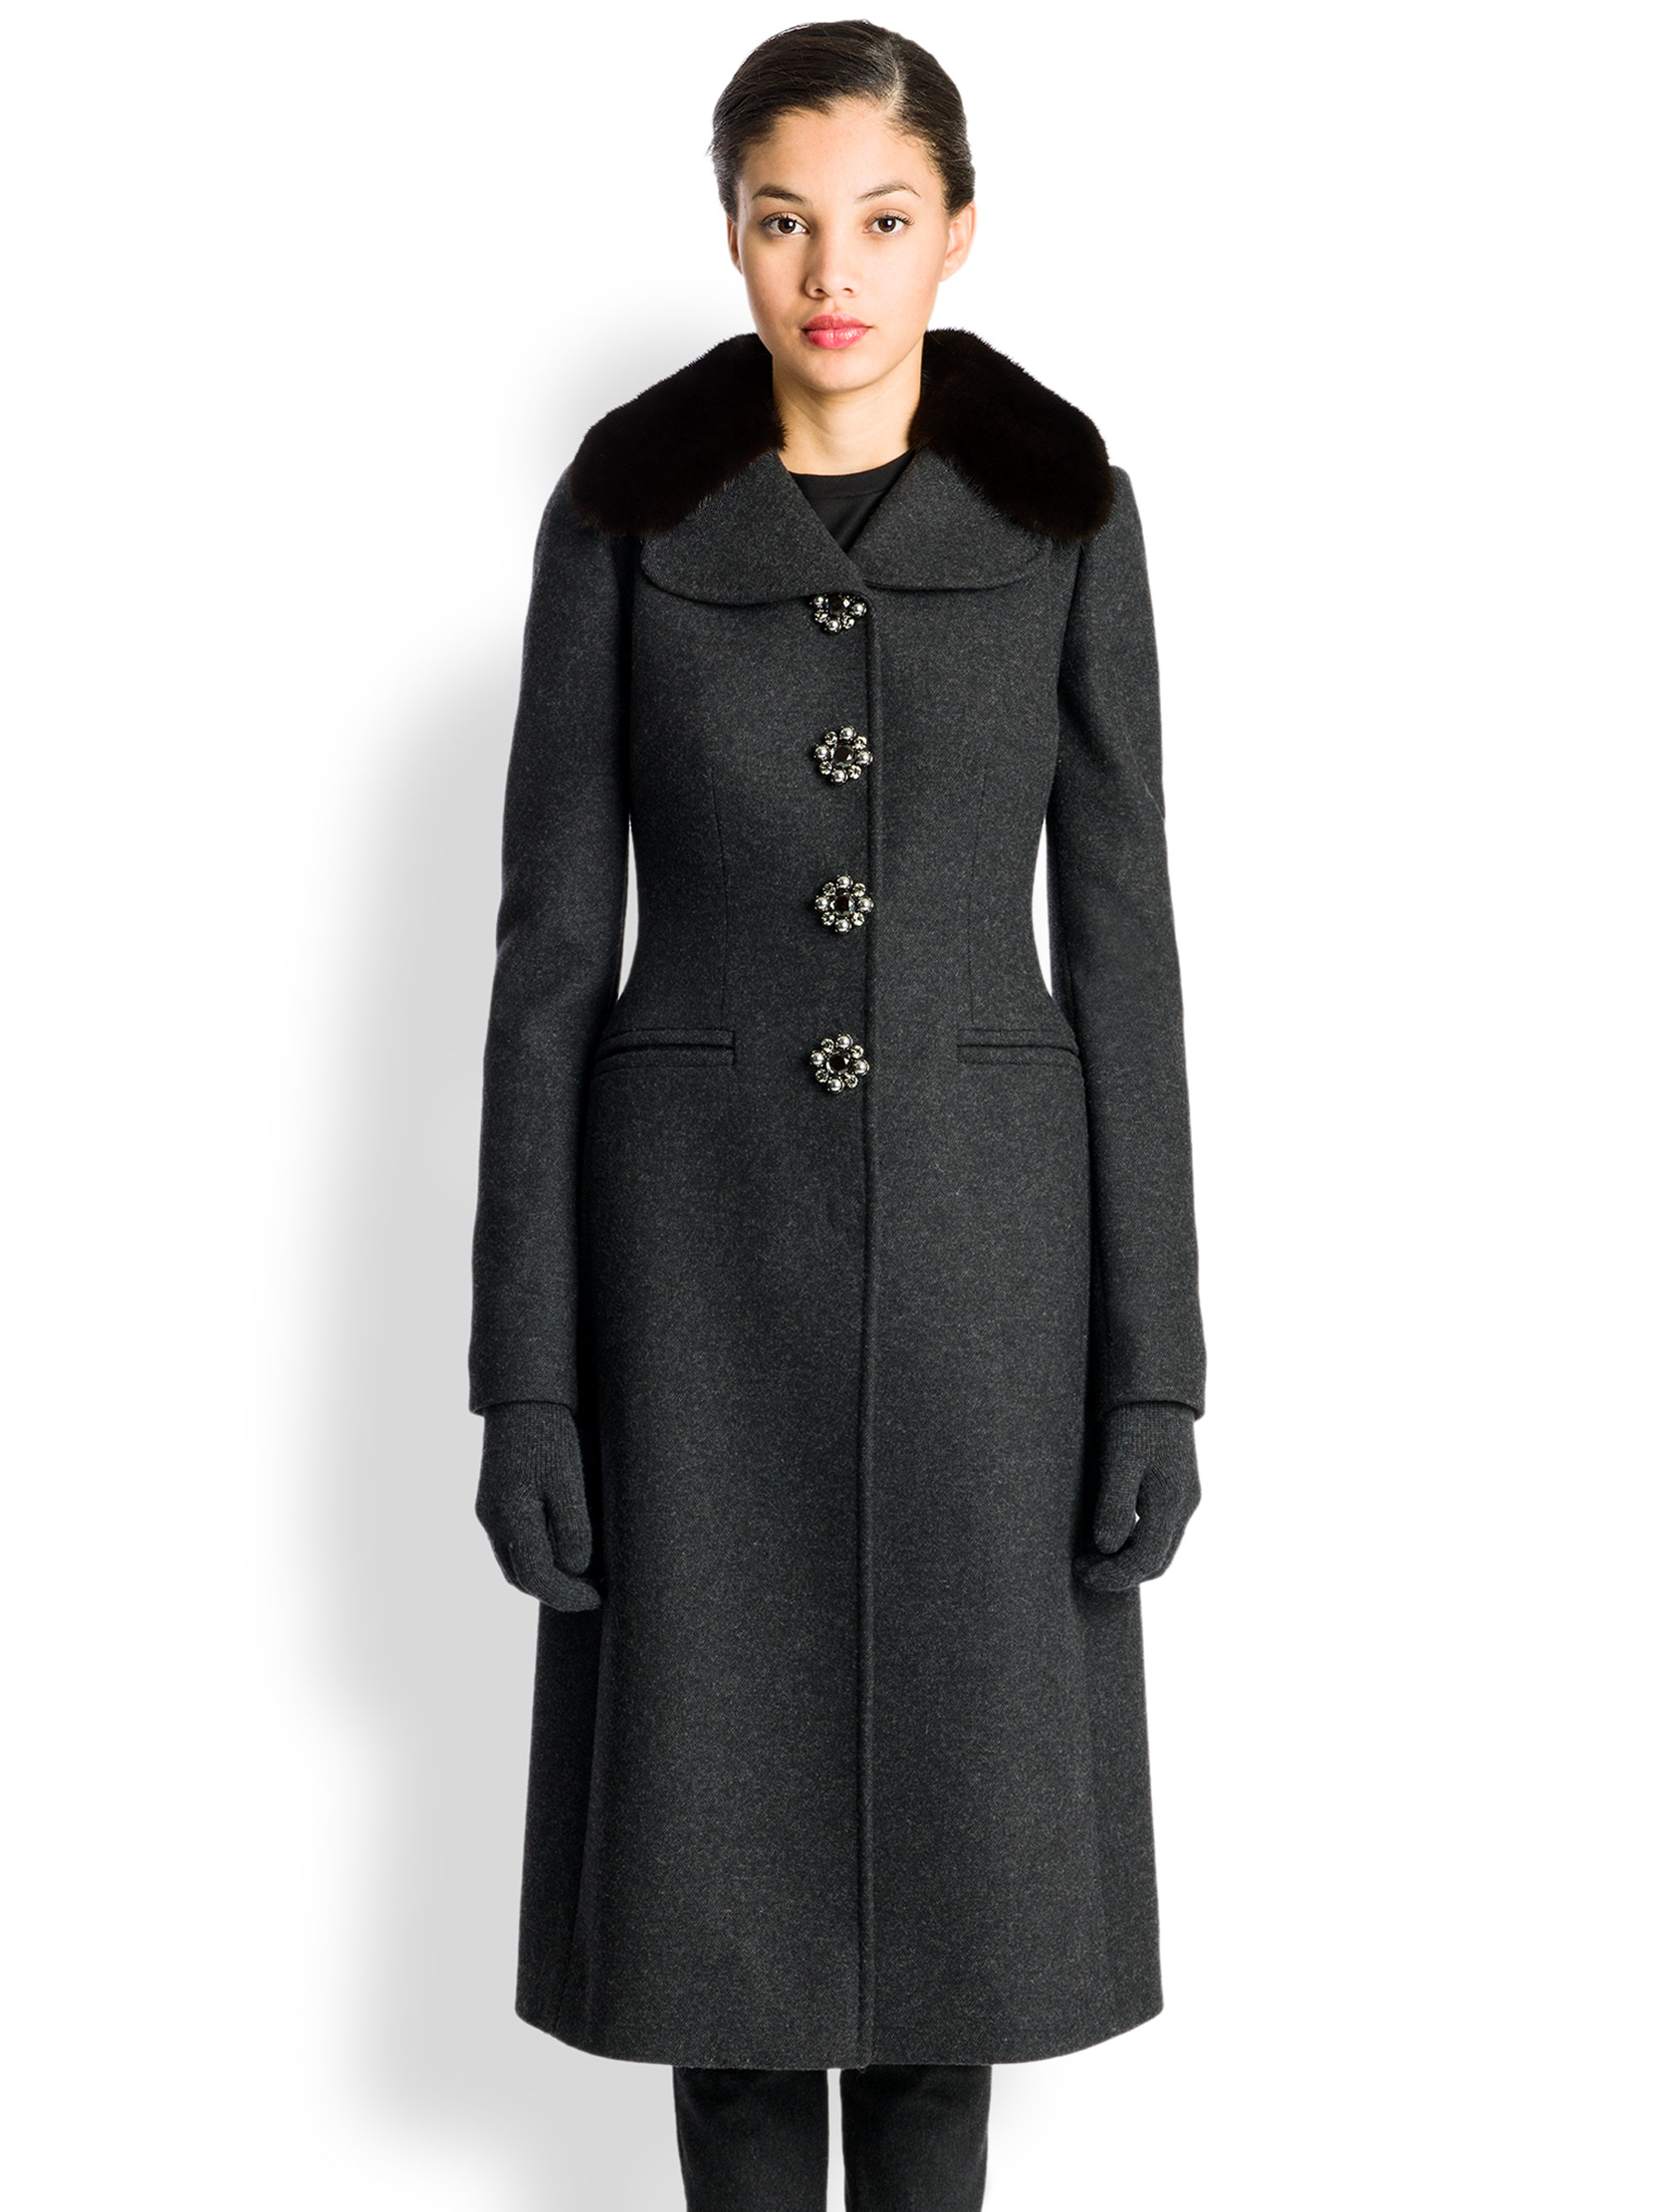 Lyst - Dolce & Gabbana Wool Fur-Trimmed Coat in Black